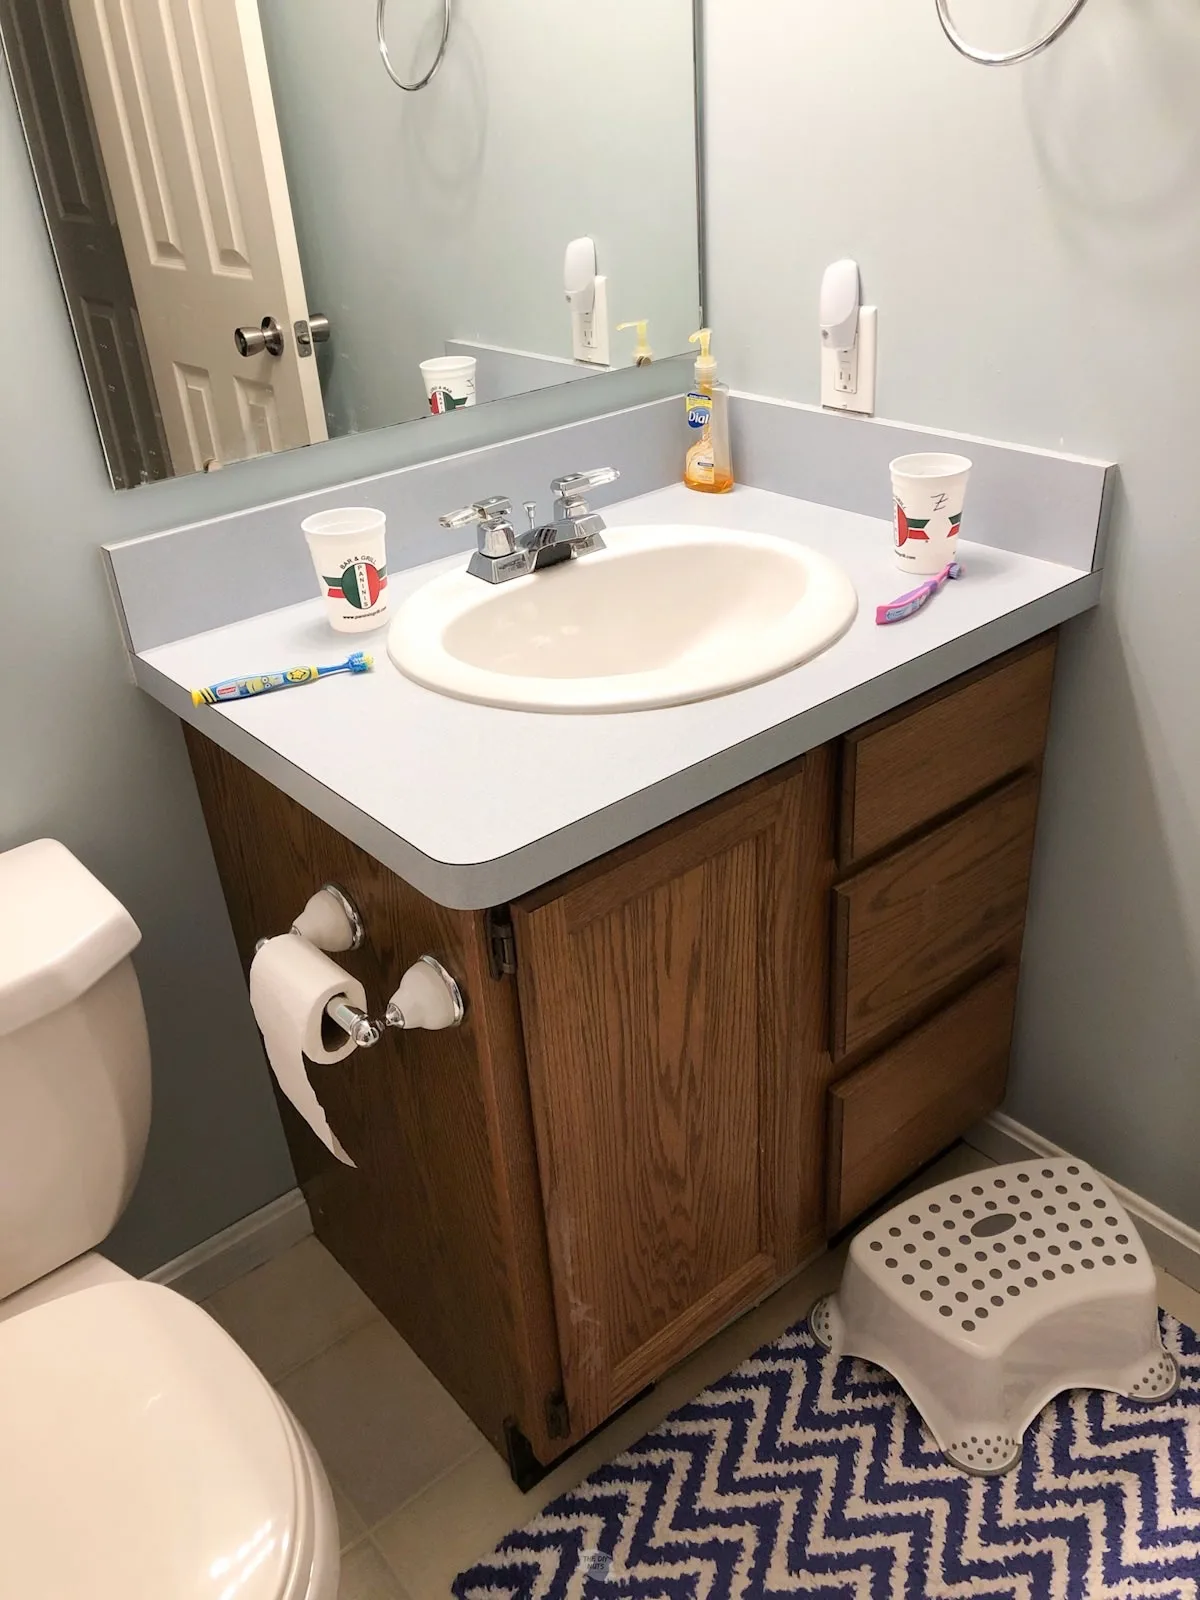 Oak bathroom vanity with blue laminate countertops, stool and carpet in small bathroom.